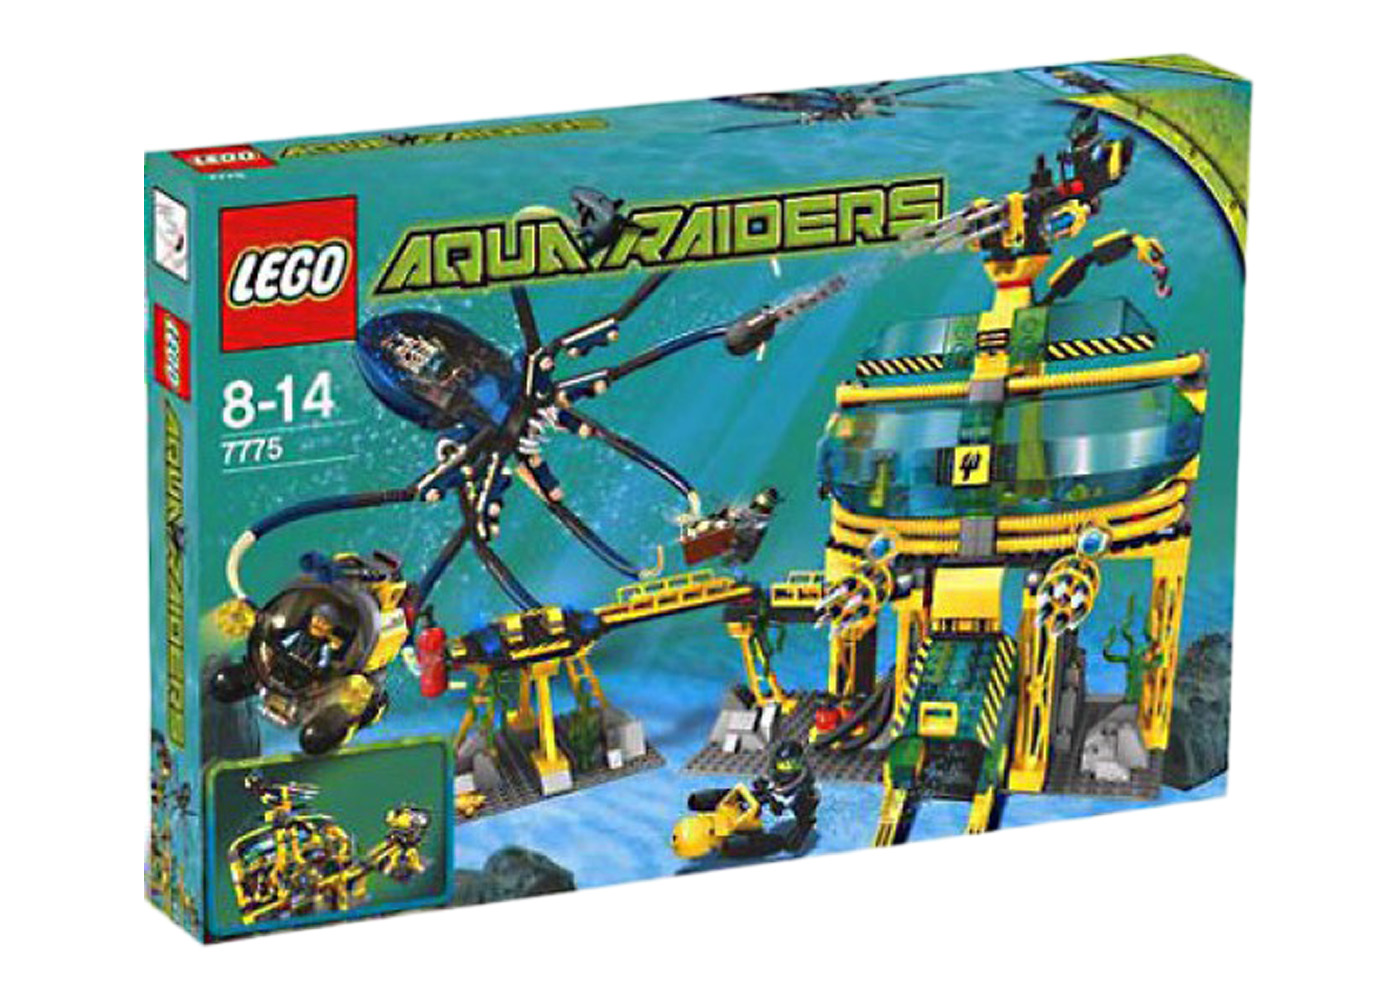 LEGO Aqua Raiders Aquabase Invasion Set 7775 - JP